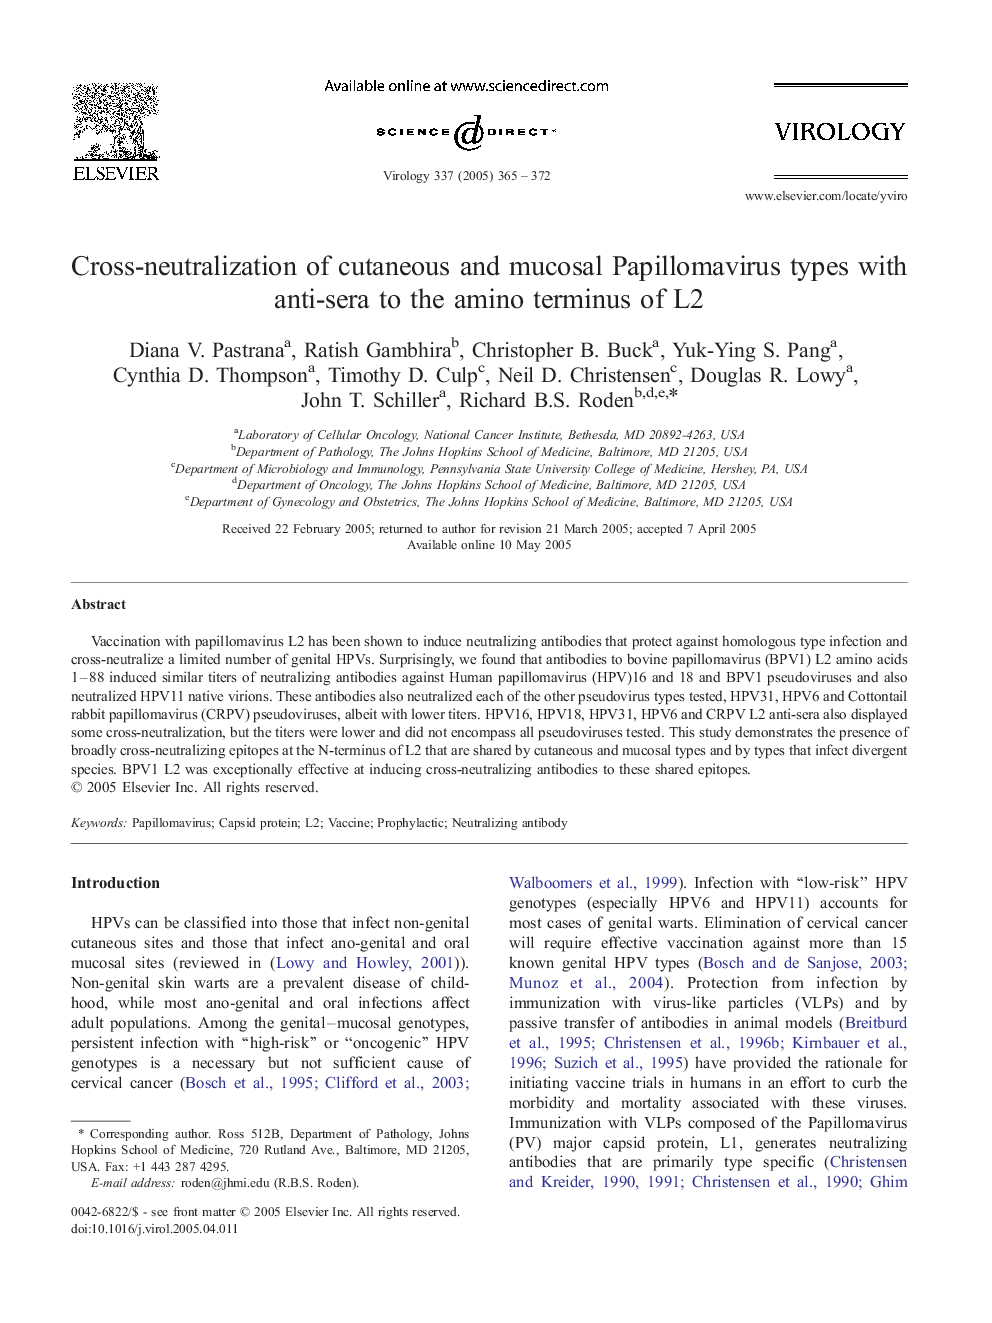 Cross-neutralization of cutaneous and mucosal Papillomavirus types with anti-sera to the amino terminus of L2